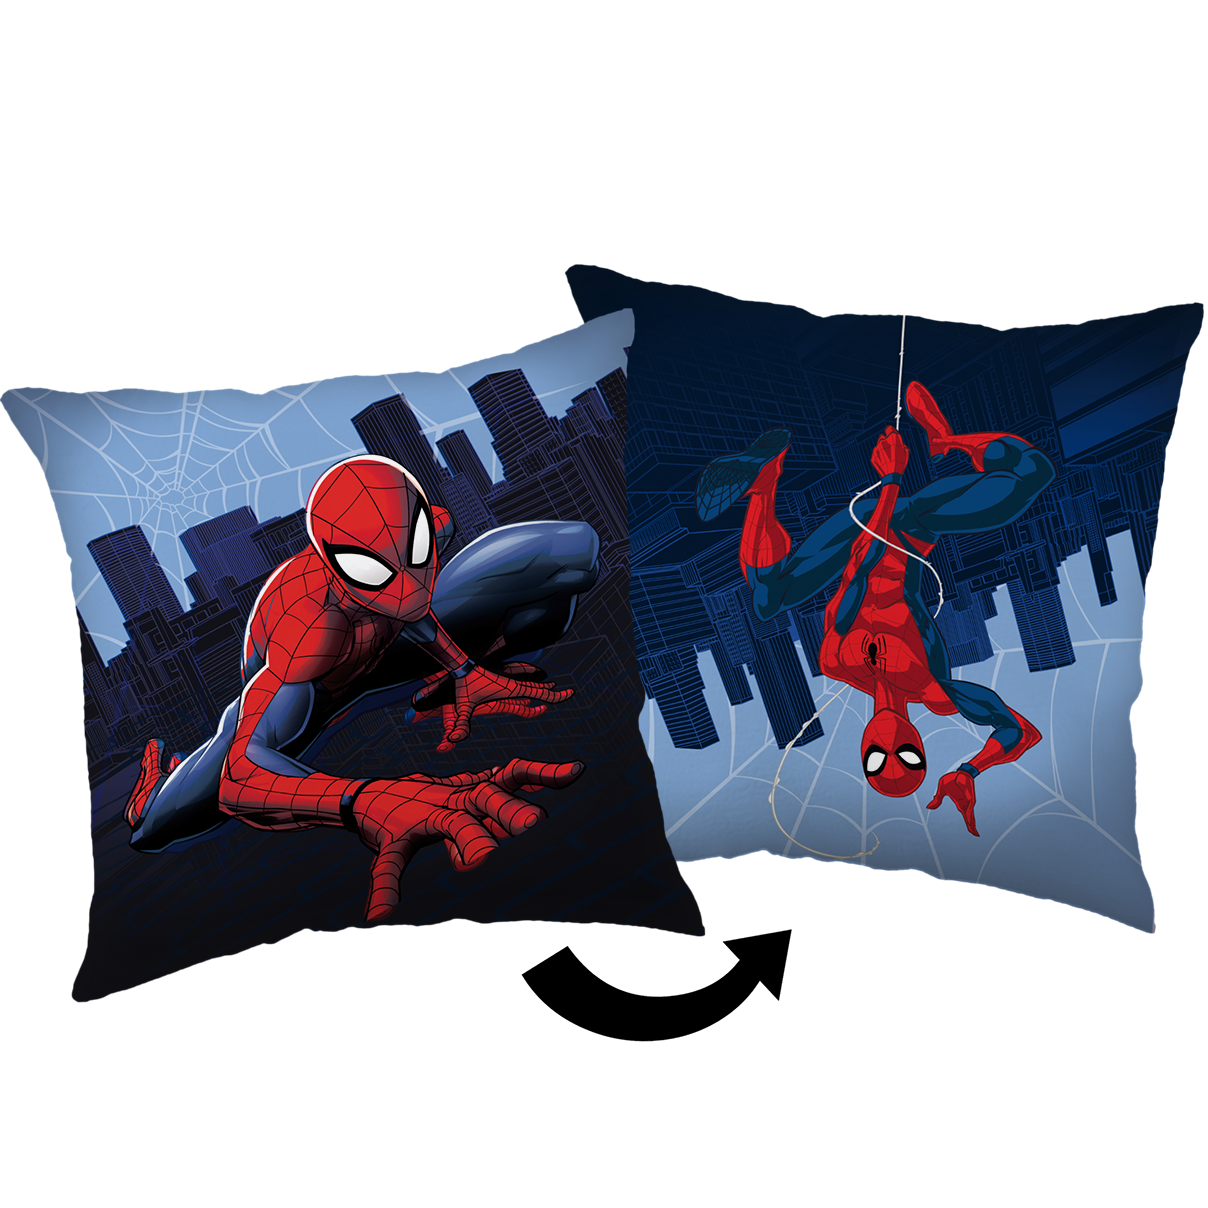 Spiderman Throw Pillow Web - 35 x 35 cm - Polyester